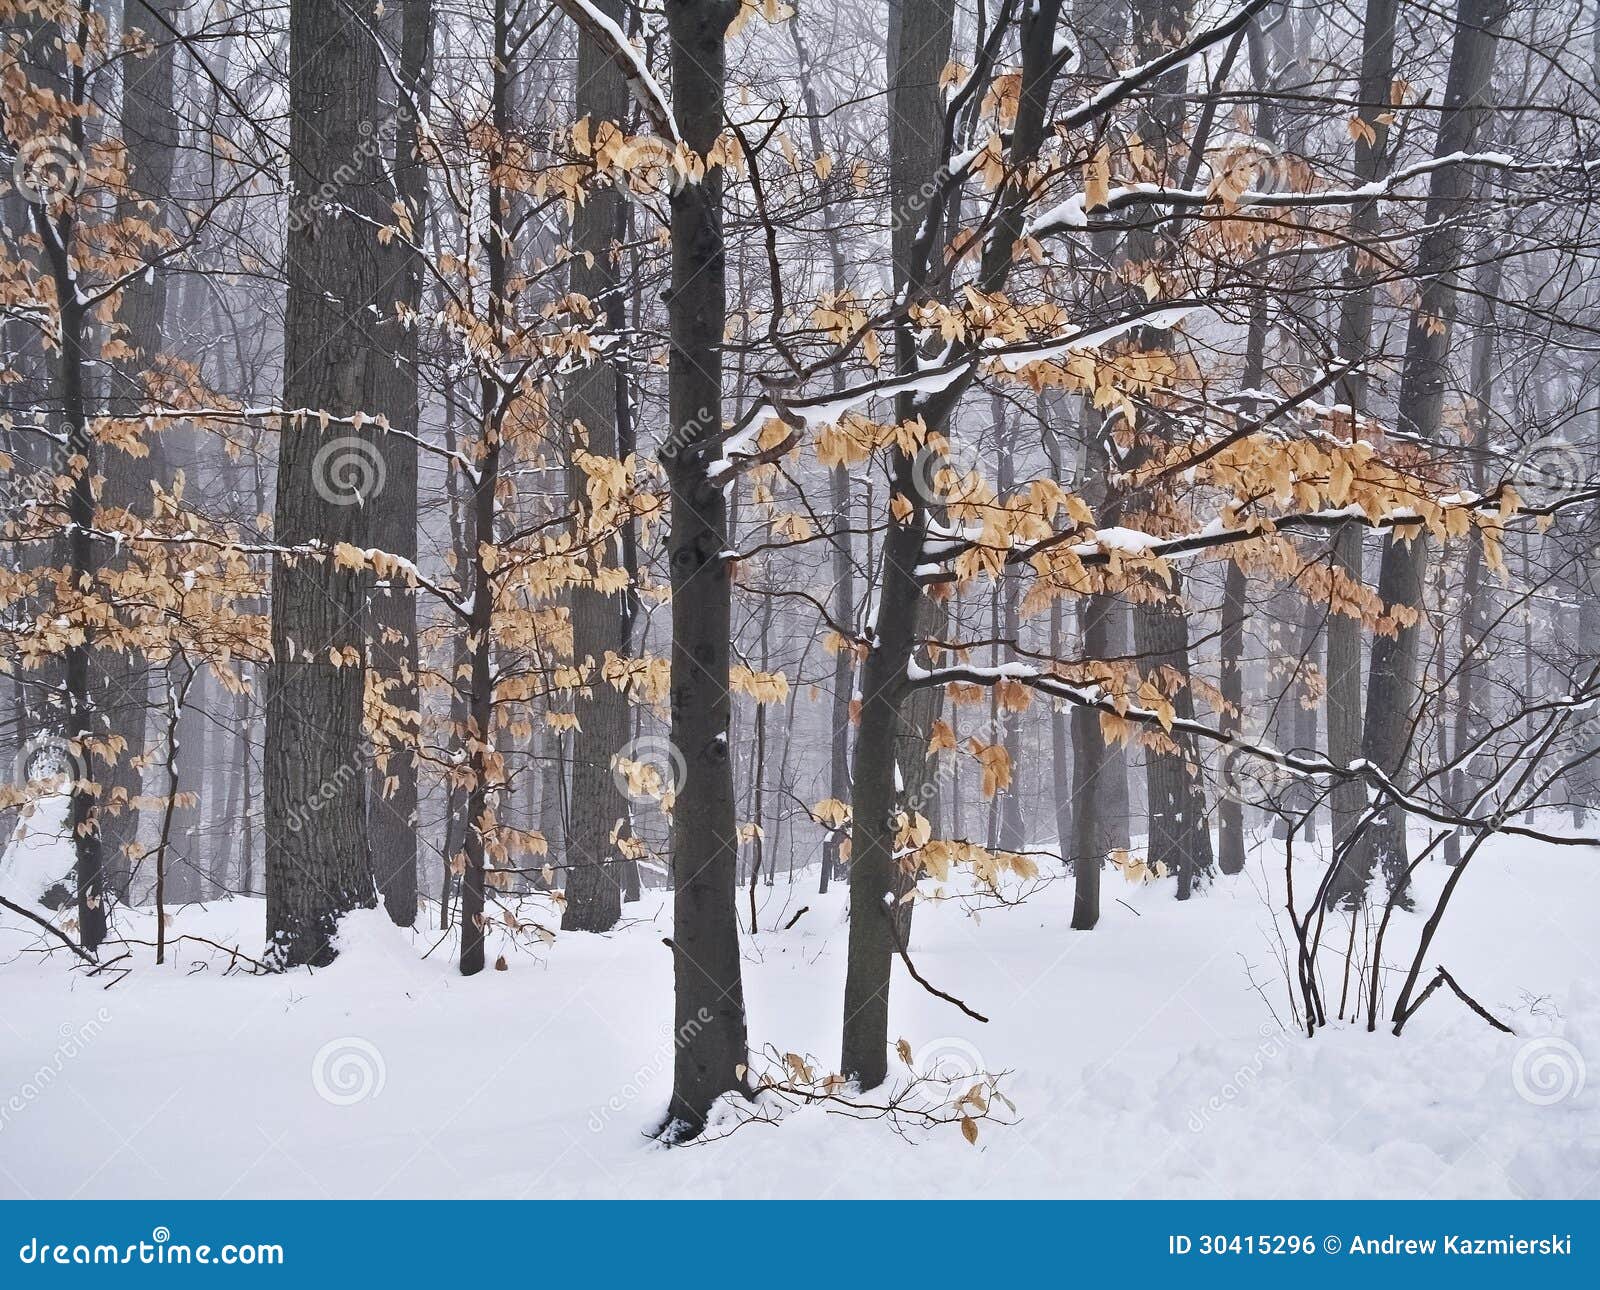 Changing Seasons stock photo. Image of landscape, winter - 30415296